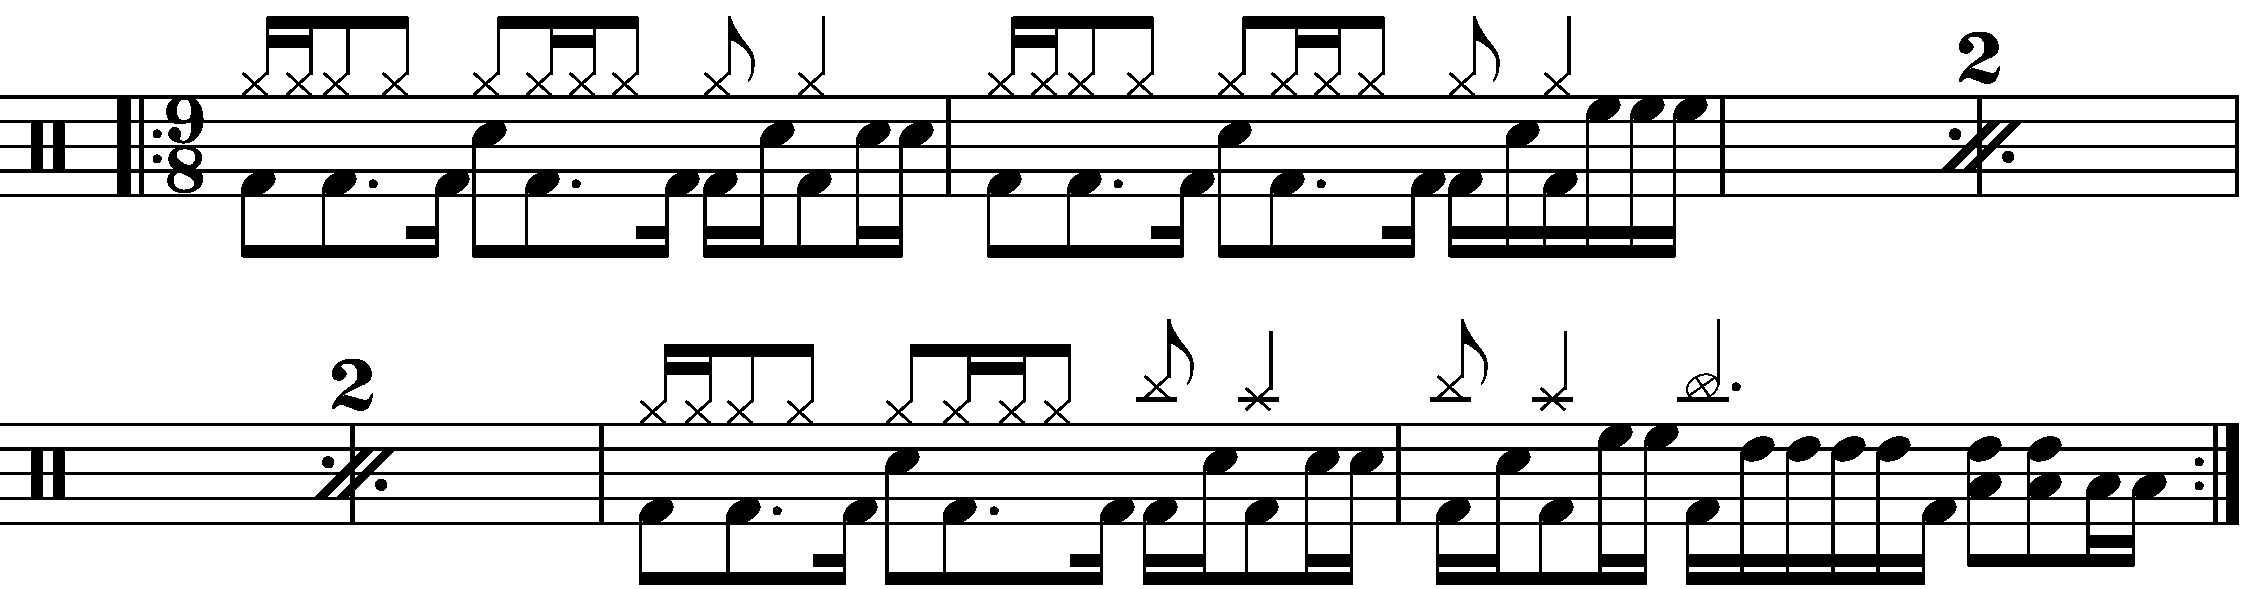 An eight bar phrase built of an AAAB pattern using 2 bar 9/8 grooves